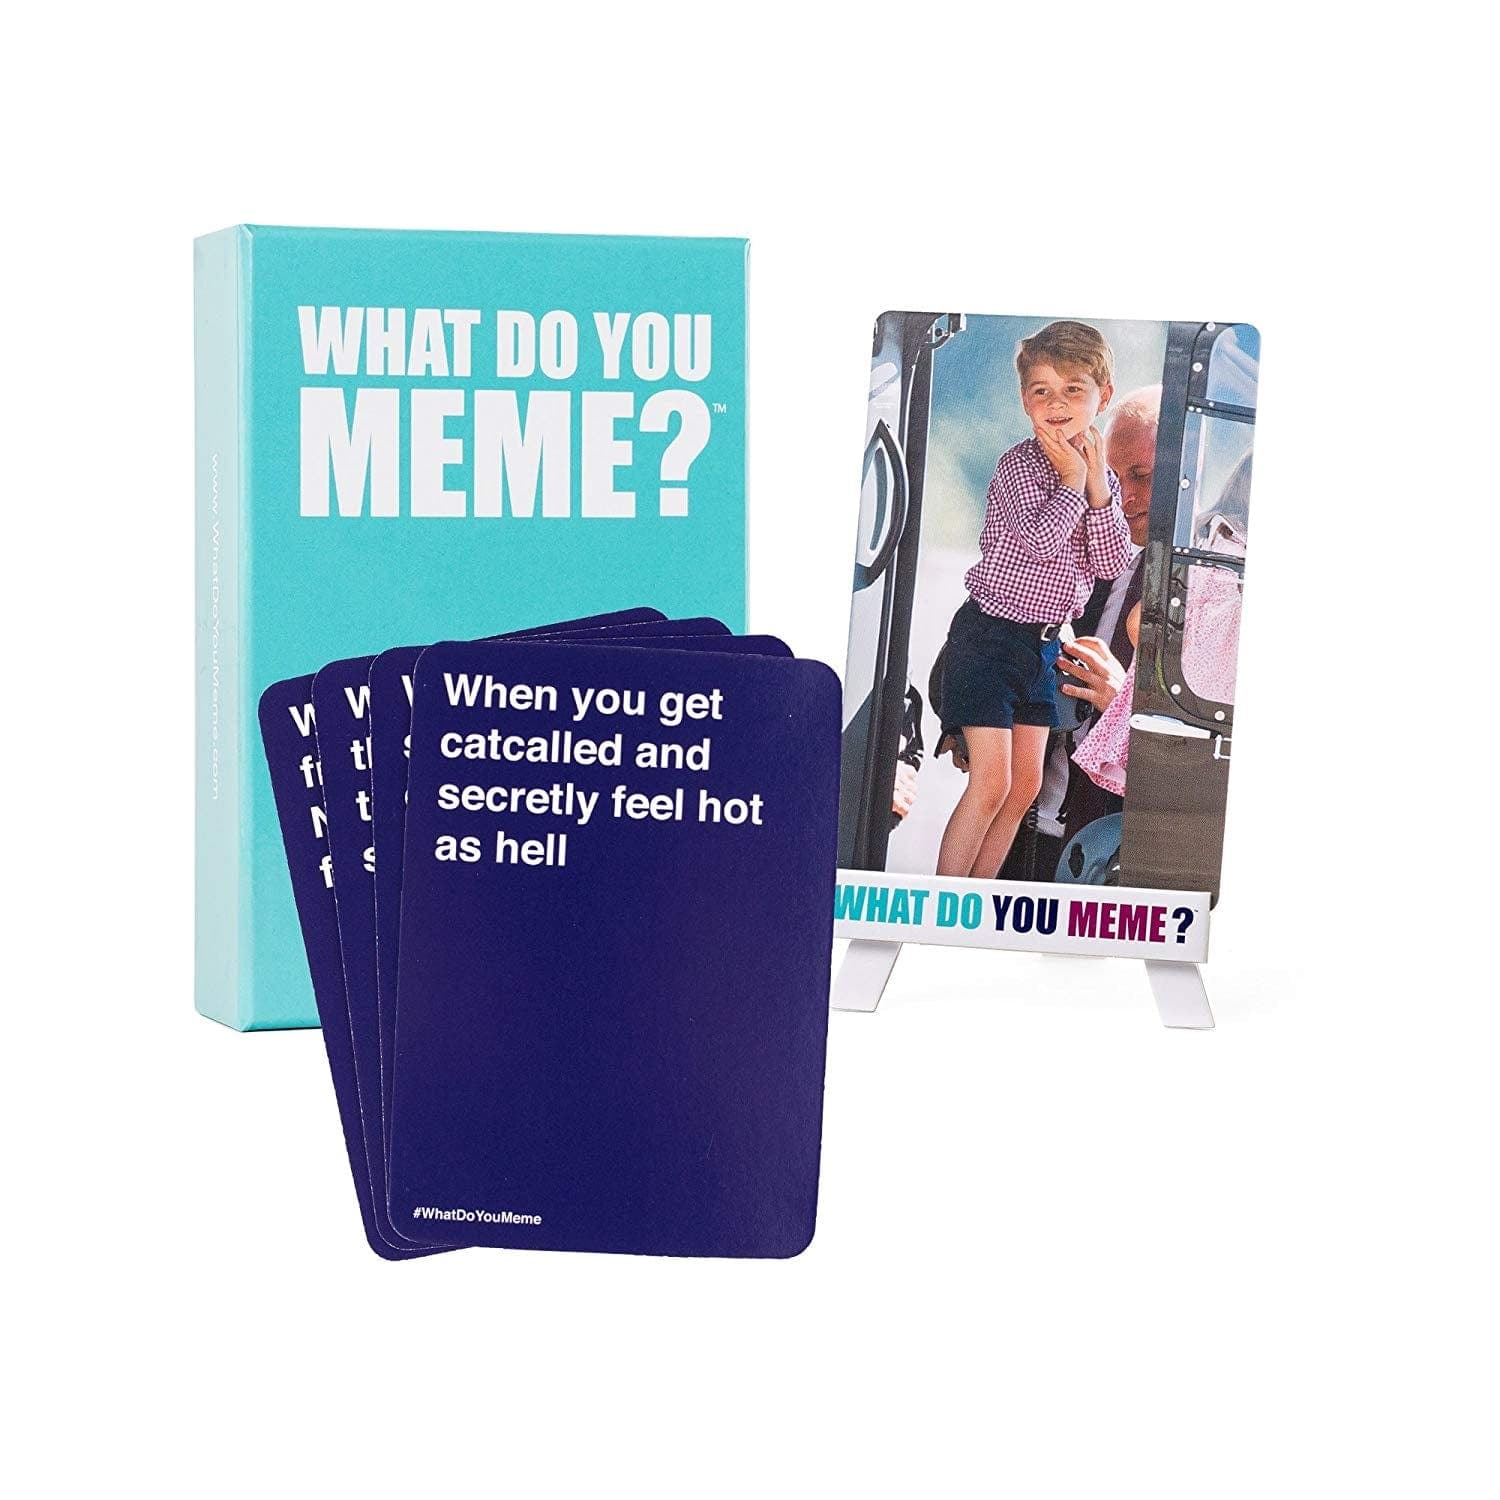 What Do You Meme-What Do You Meme? Fresh Meme Expansion Pack 1-EXPK300-Legacy Toys